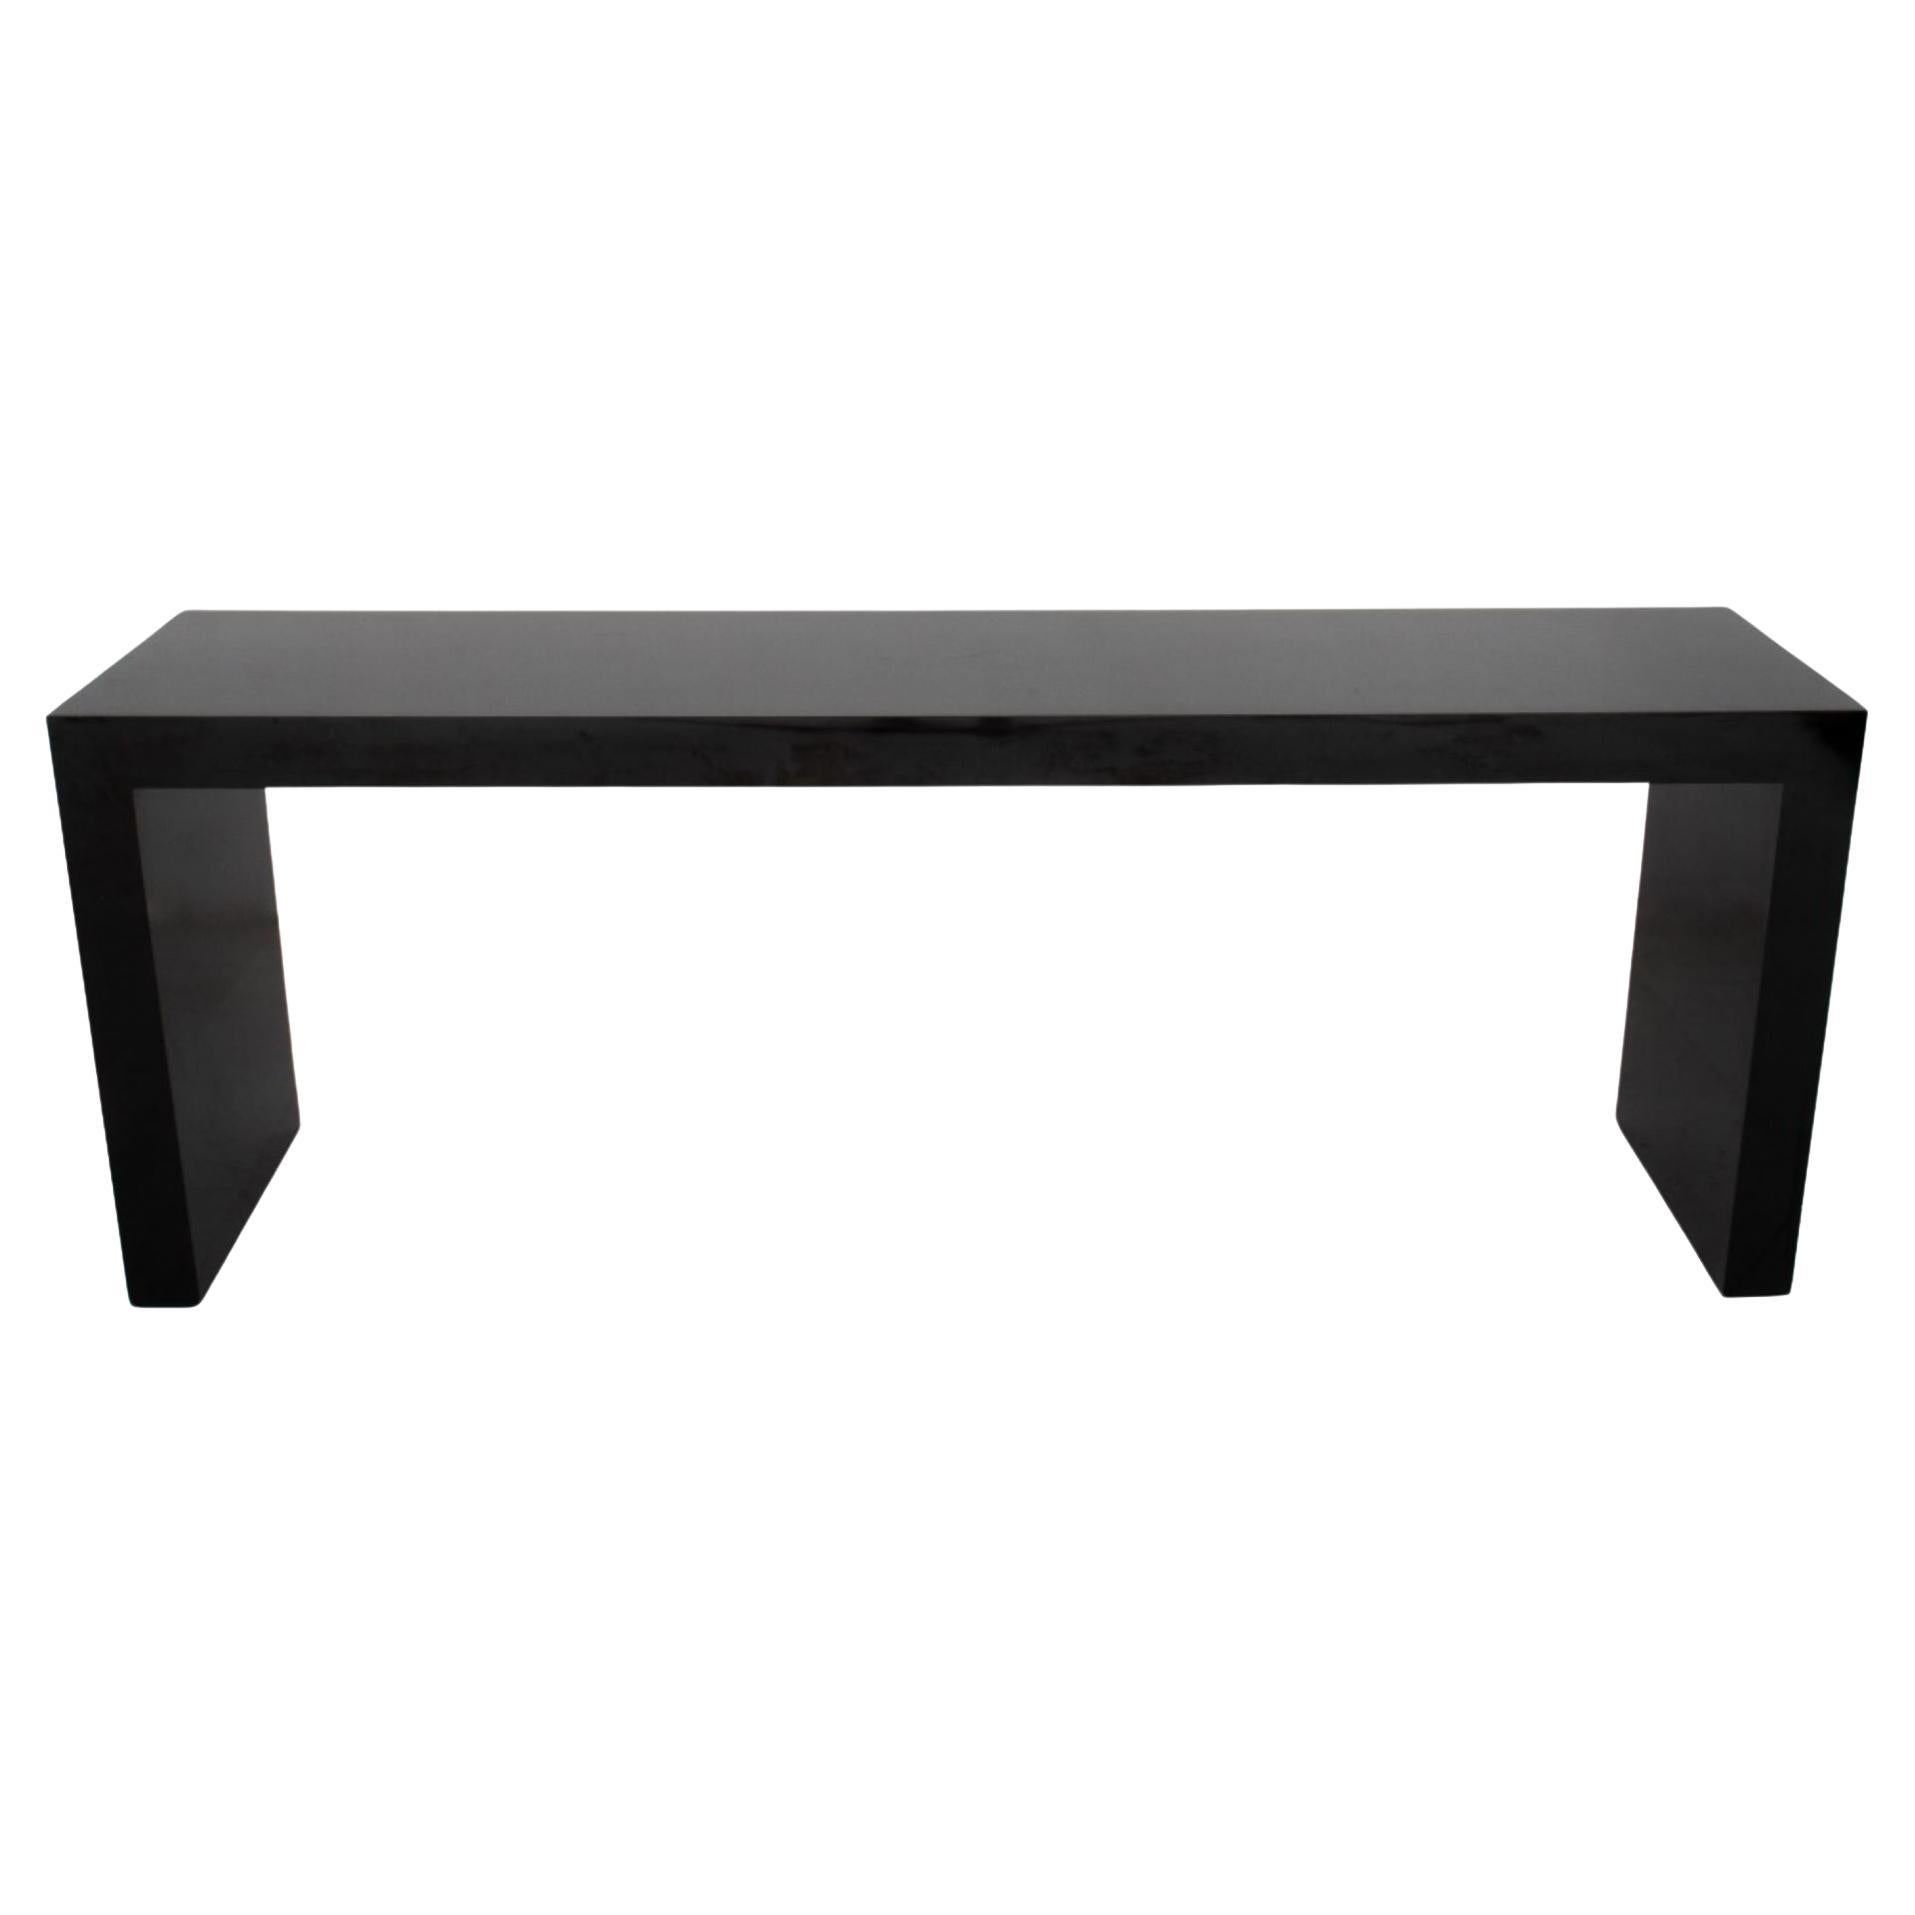 Minimalist Black Lacquer Console Table For Sale